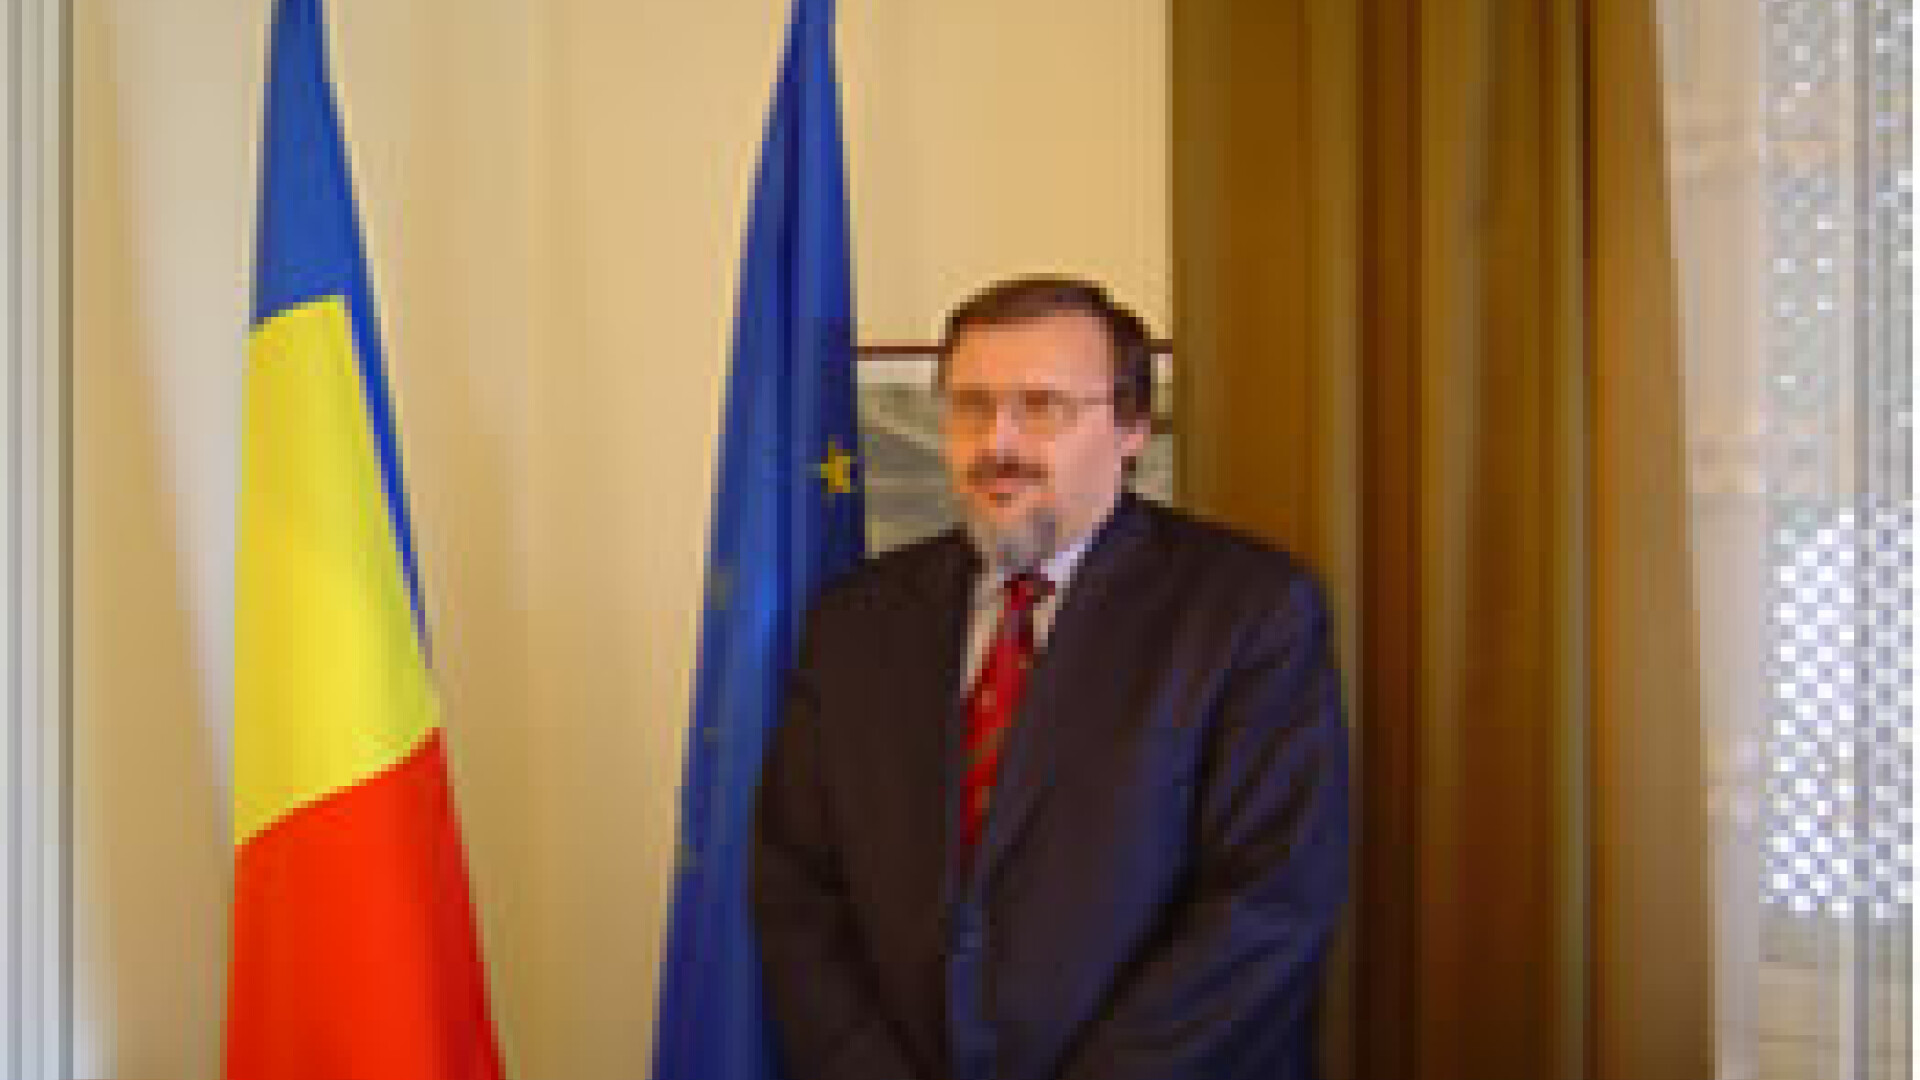 Sorin Mihail Tanasescu